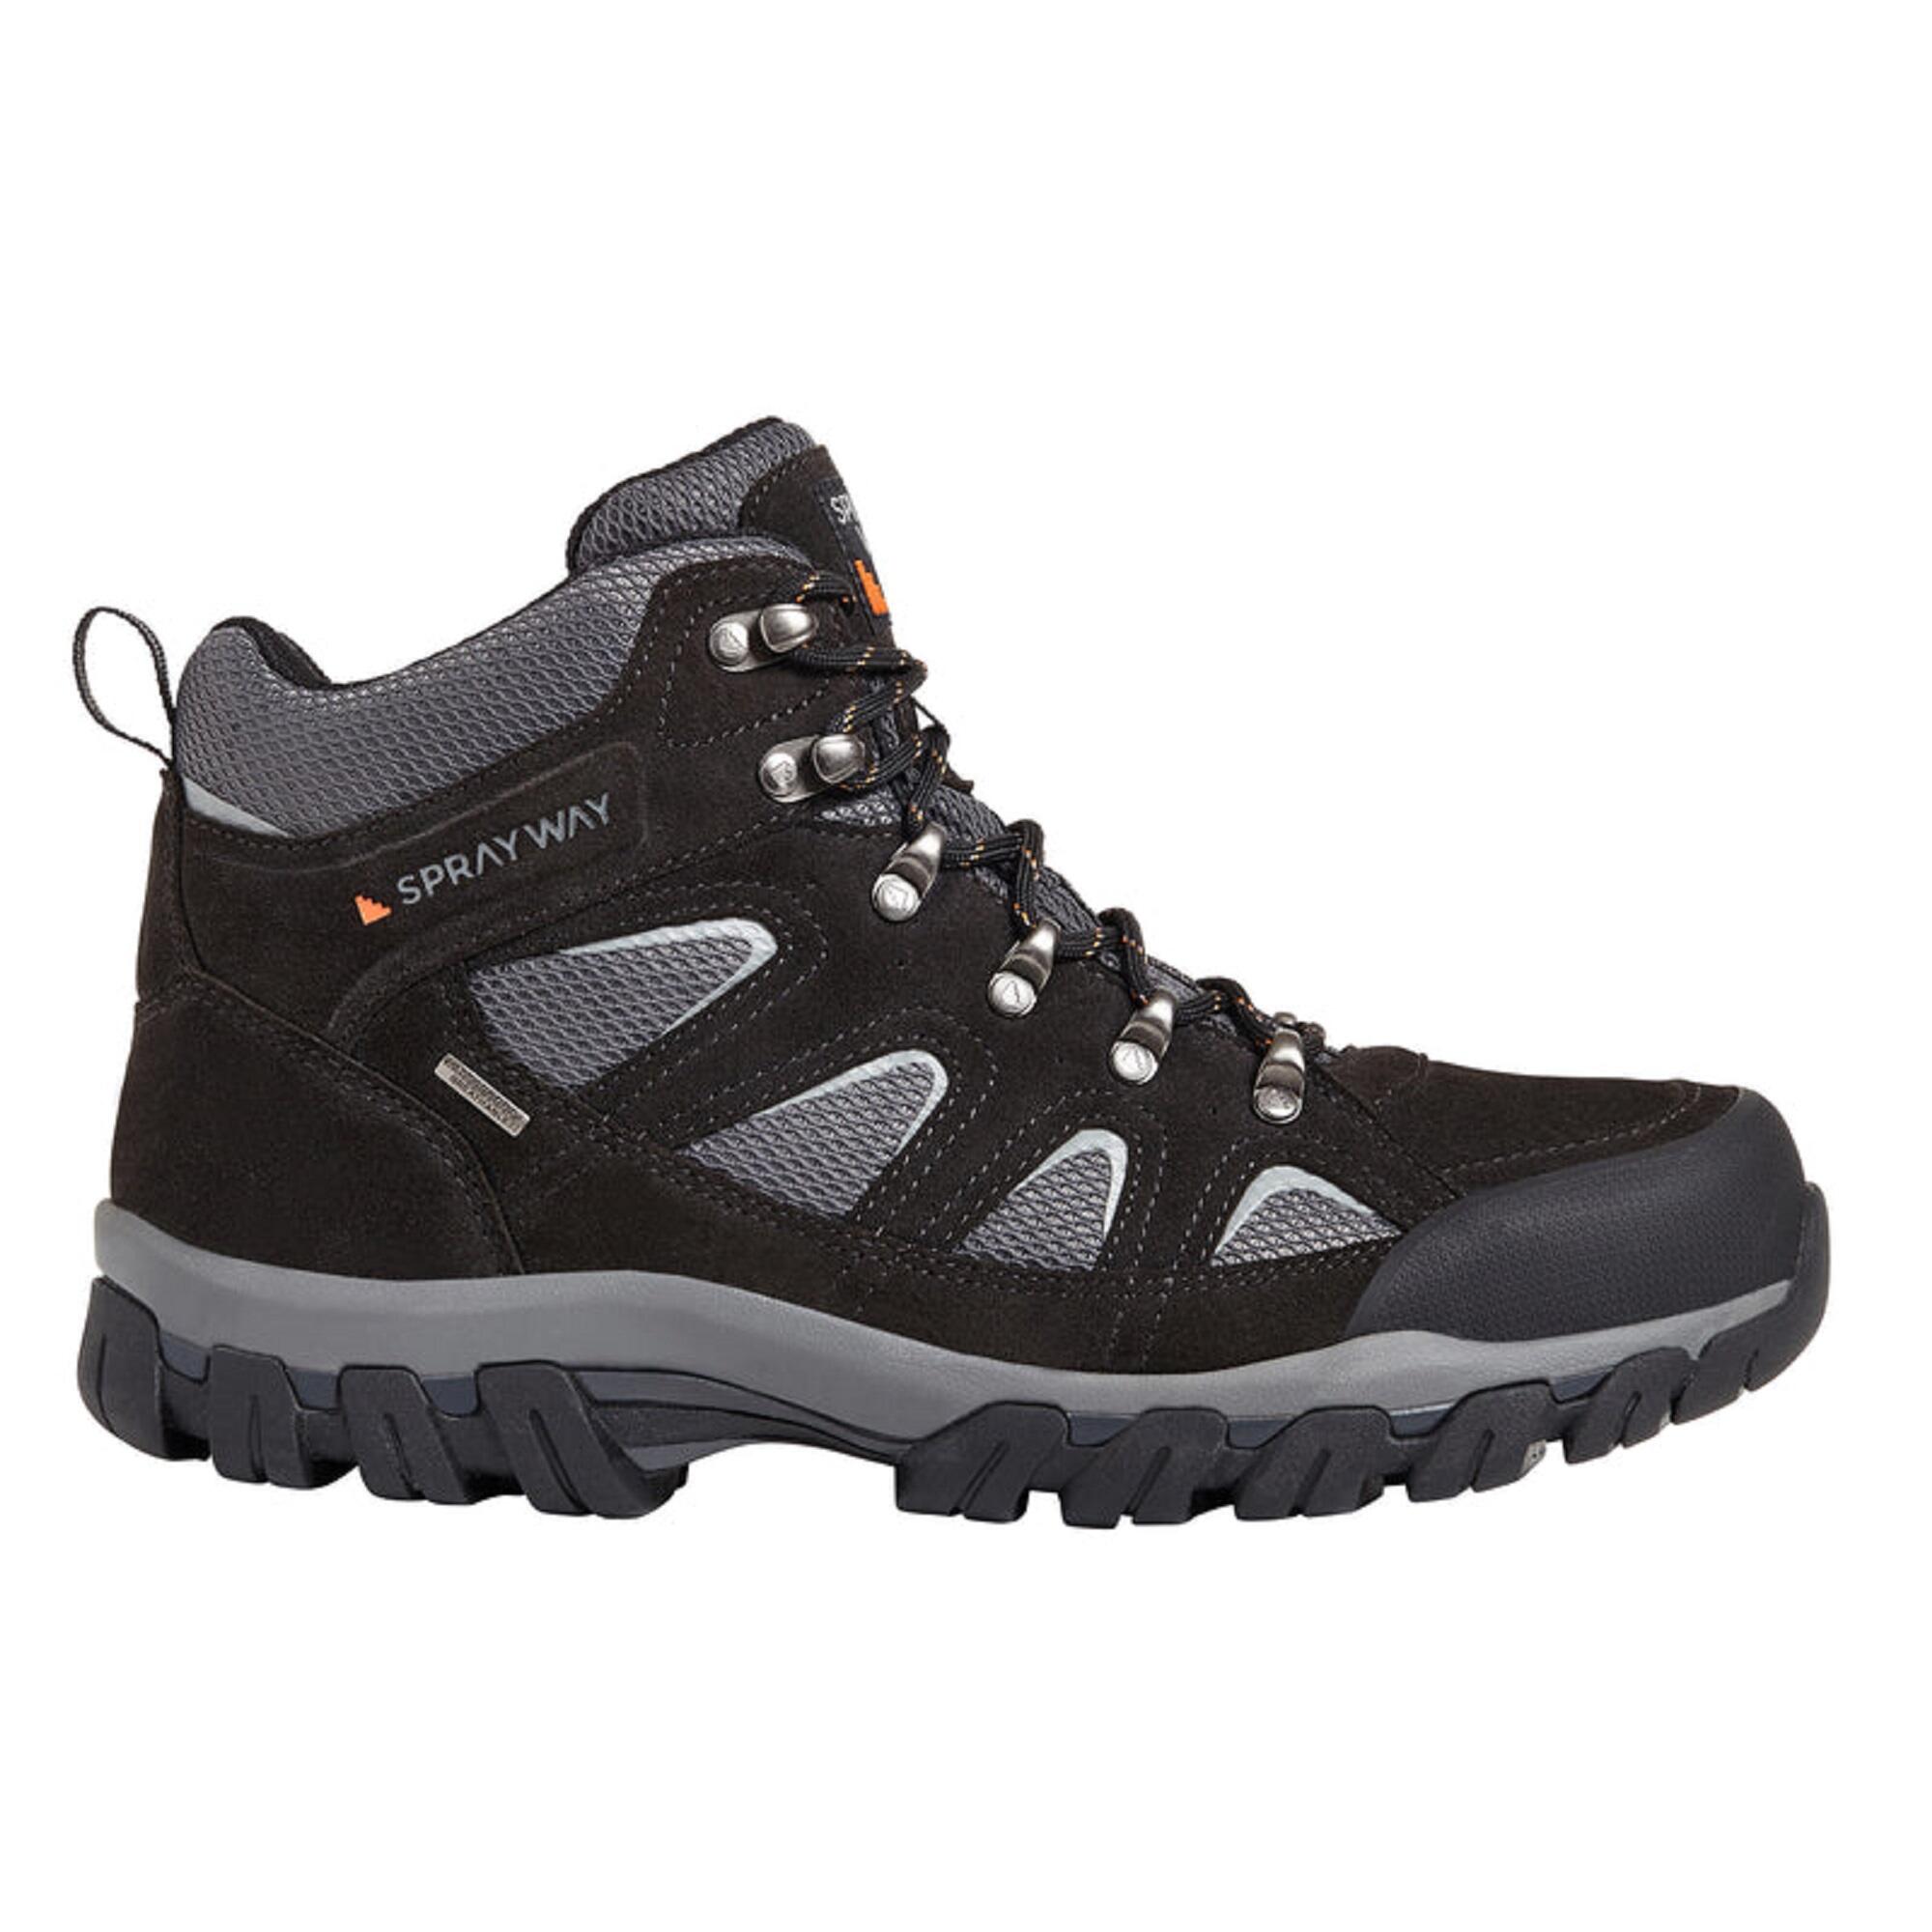 Men's waterproof walking boots - Sprayway Mull mid - Black 6/6